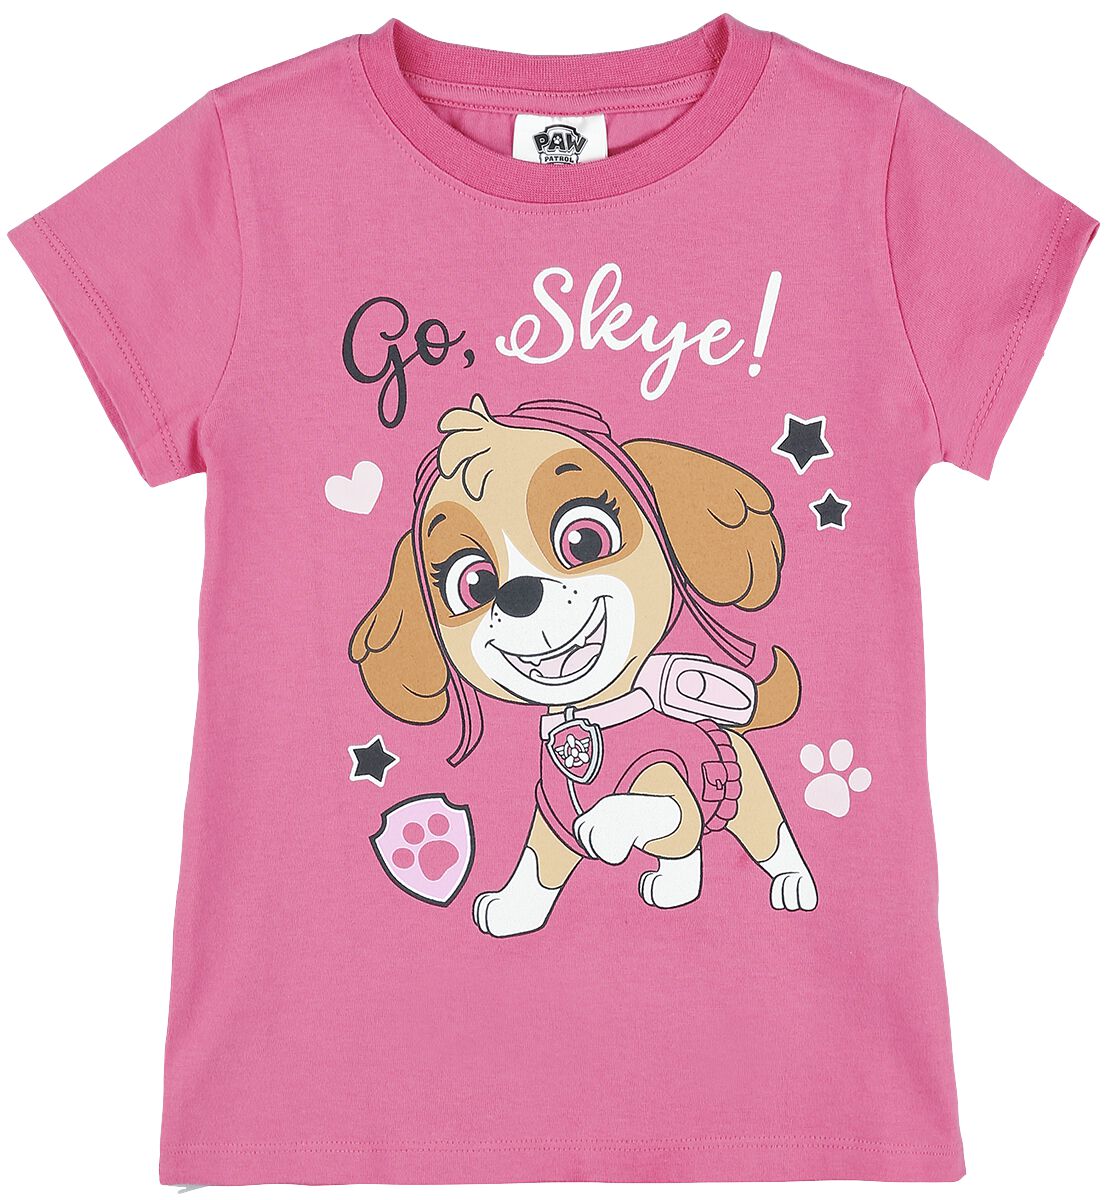 Paw Patrol Go, Skye! T-Shirt pink